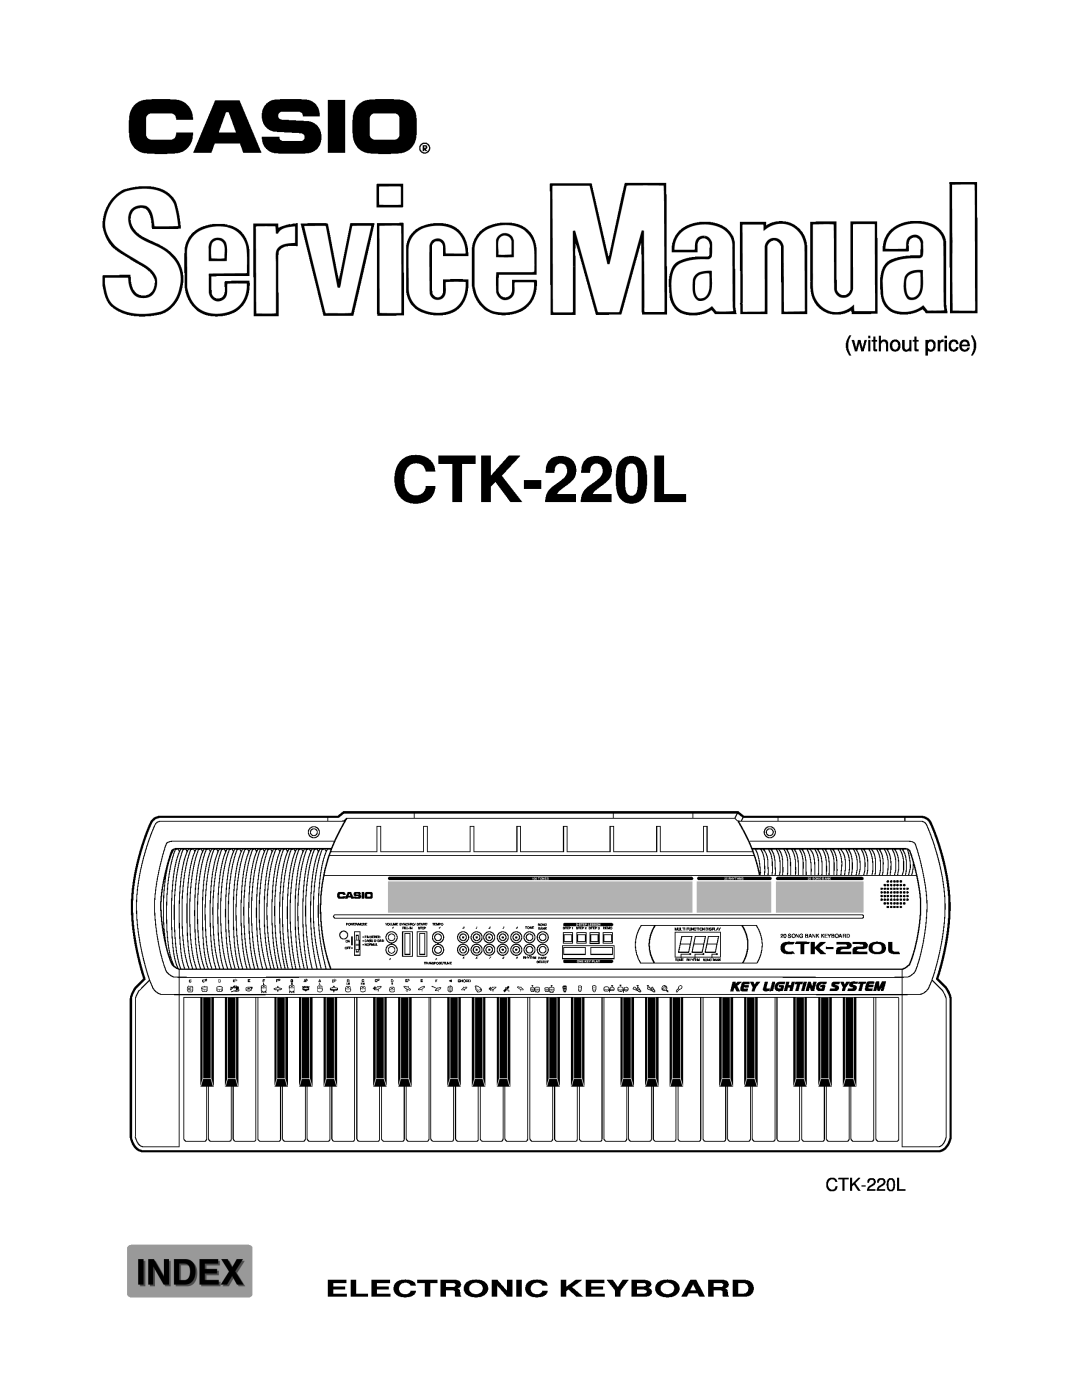 Casio CTK-220L manual Electronic Keyboard, Song Bank Keyboard, Multi Function Display, Tones, Rhythms 